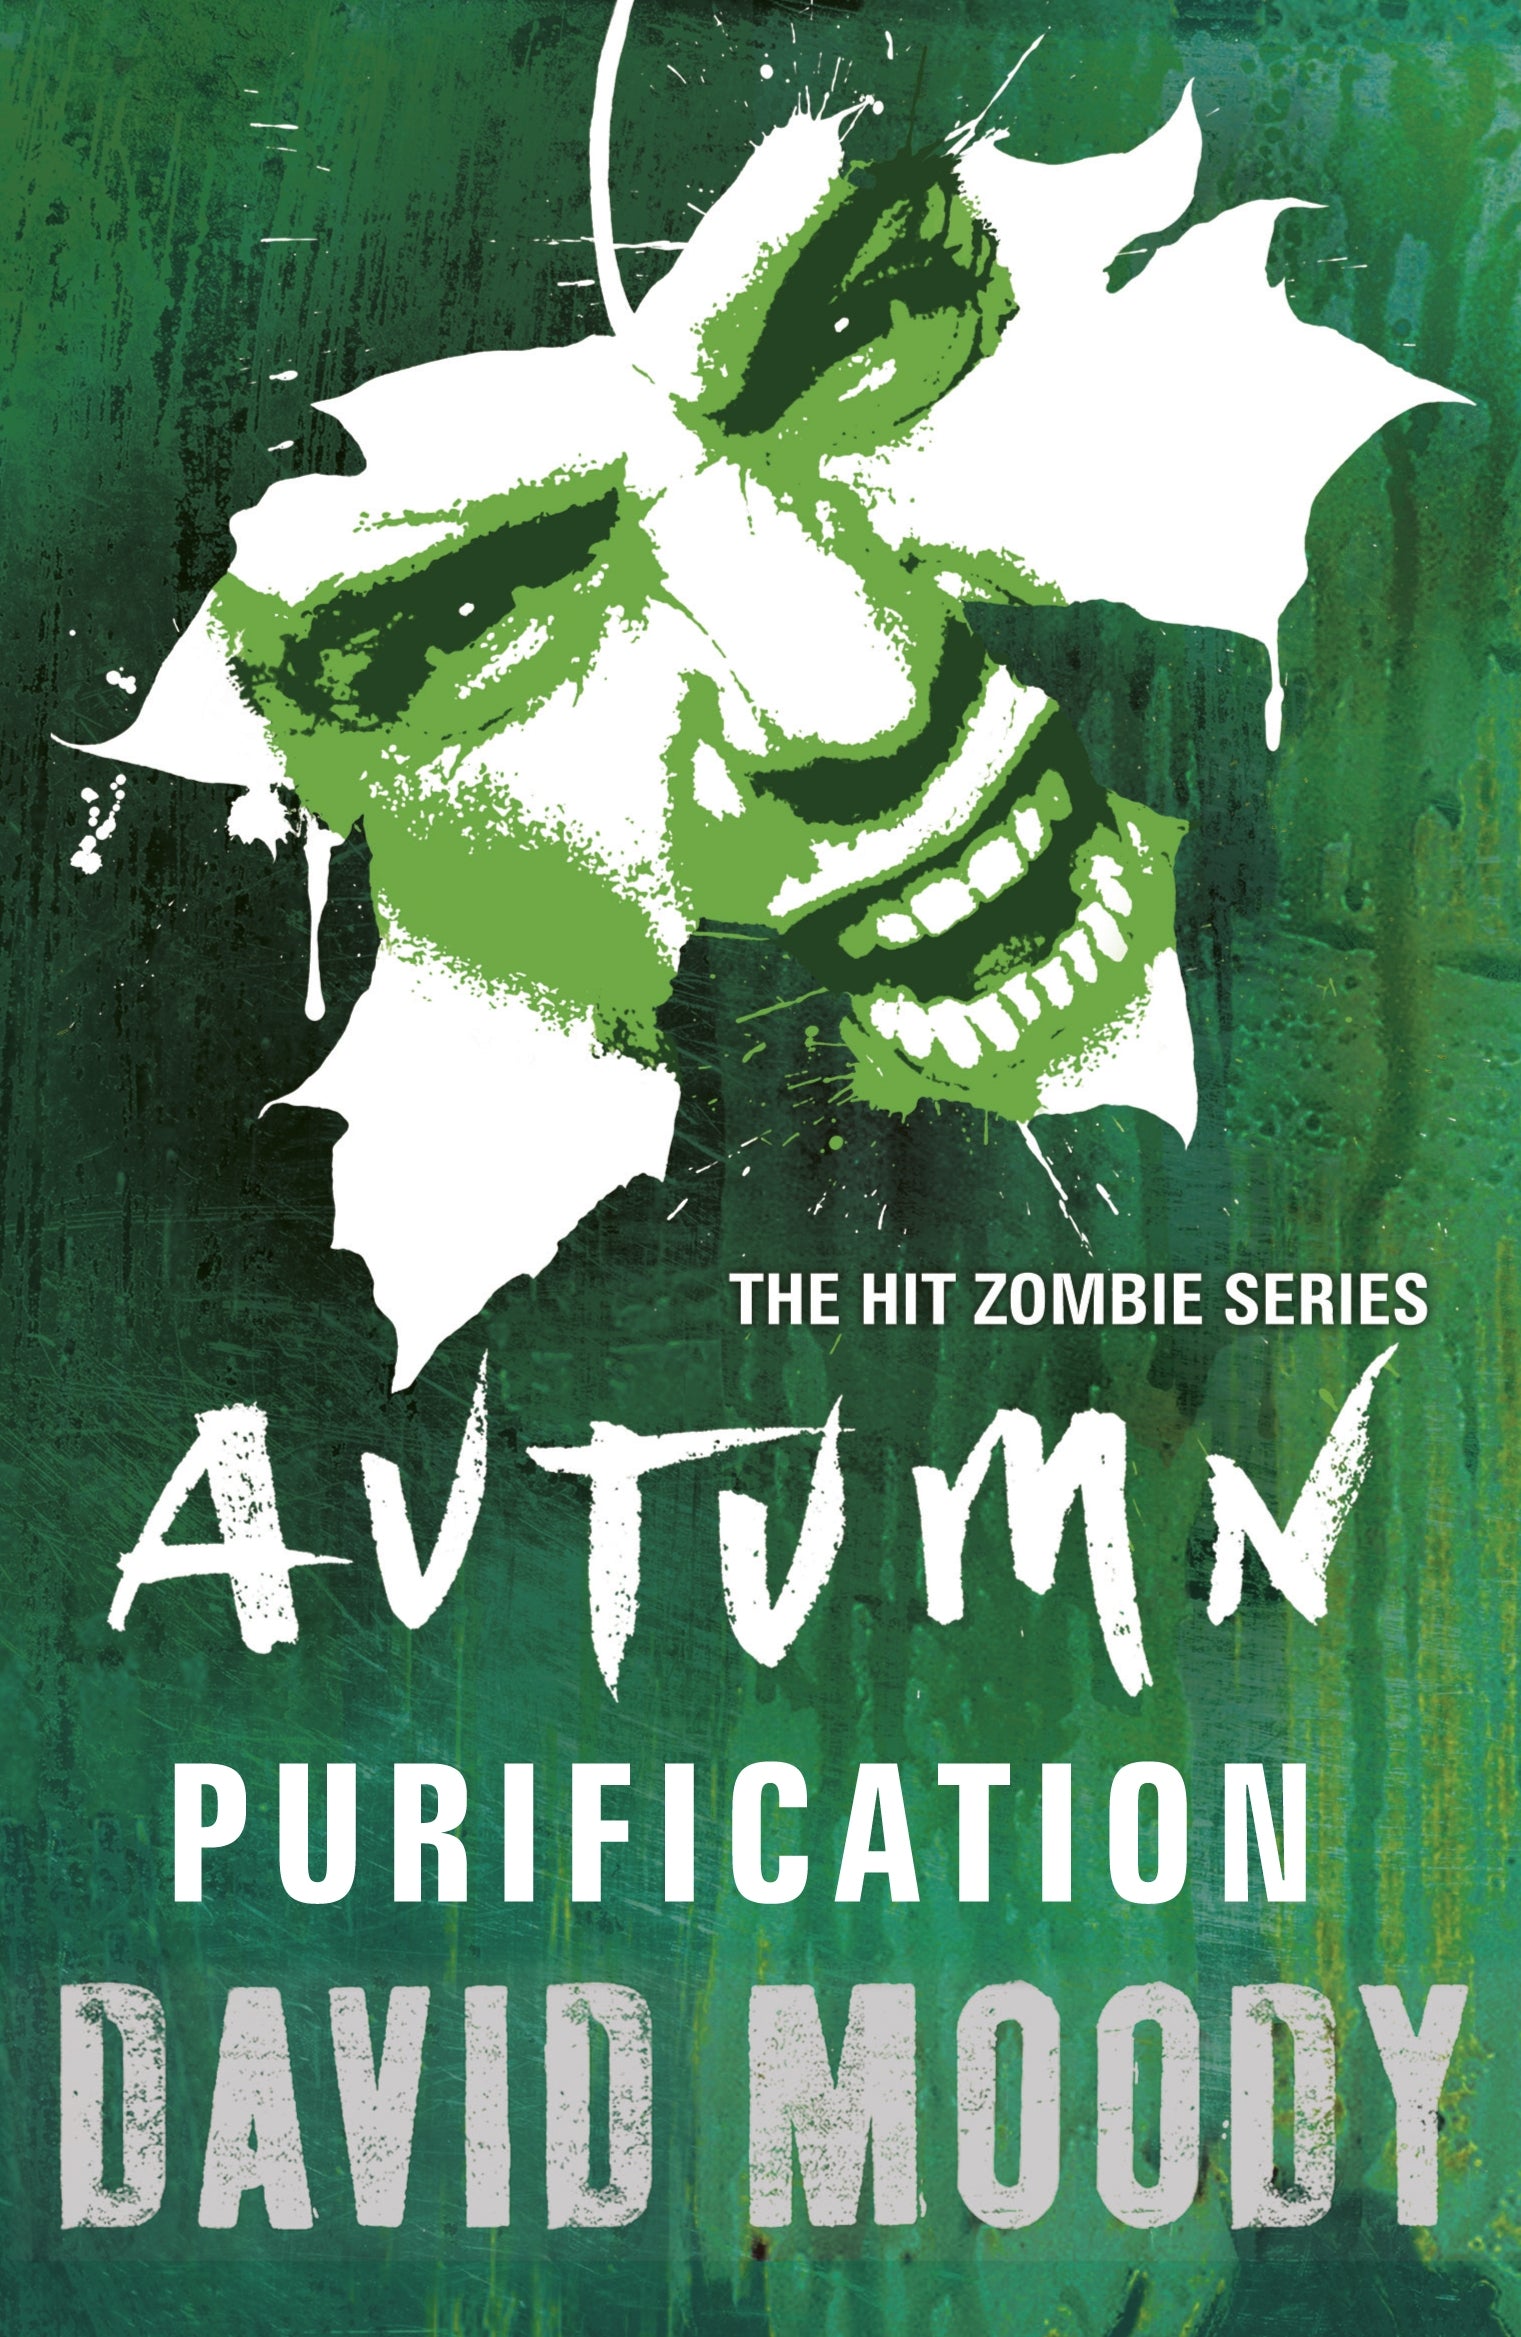 Autumn: Purification by David Moody